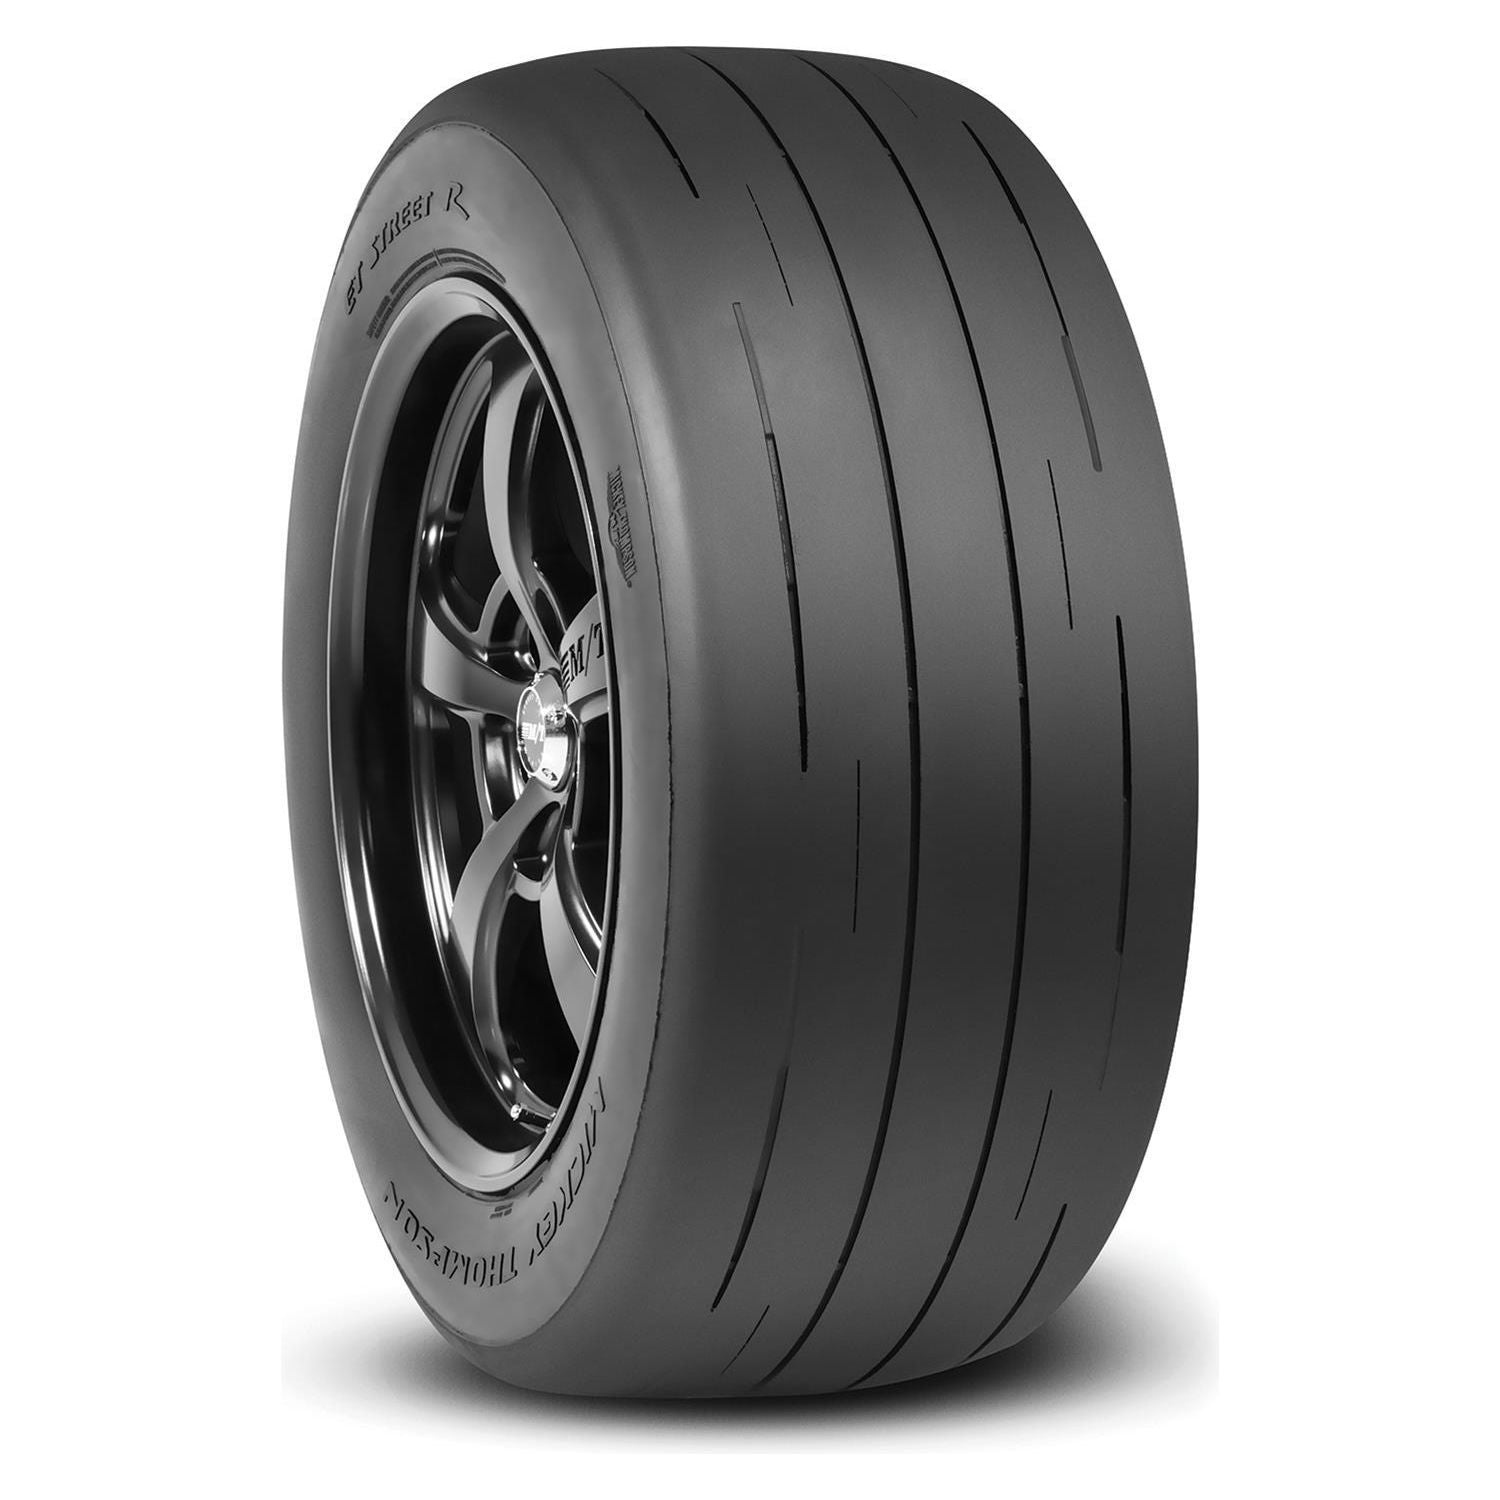 P305/45R18 ET Street R Tire